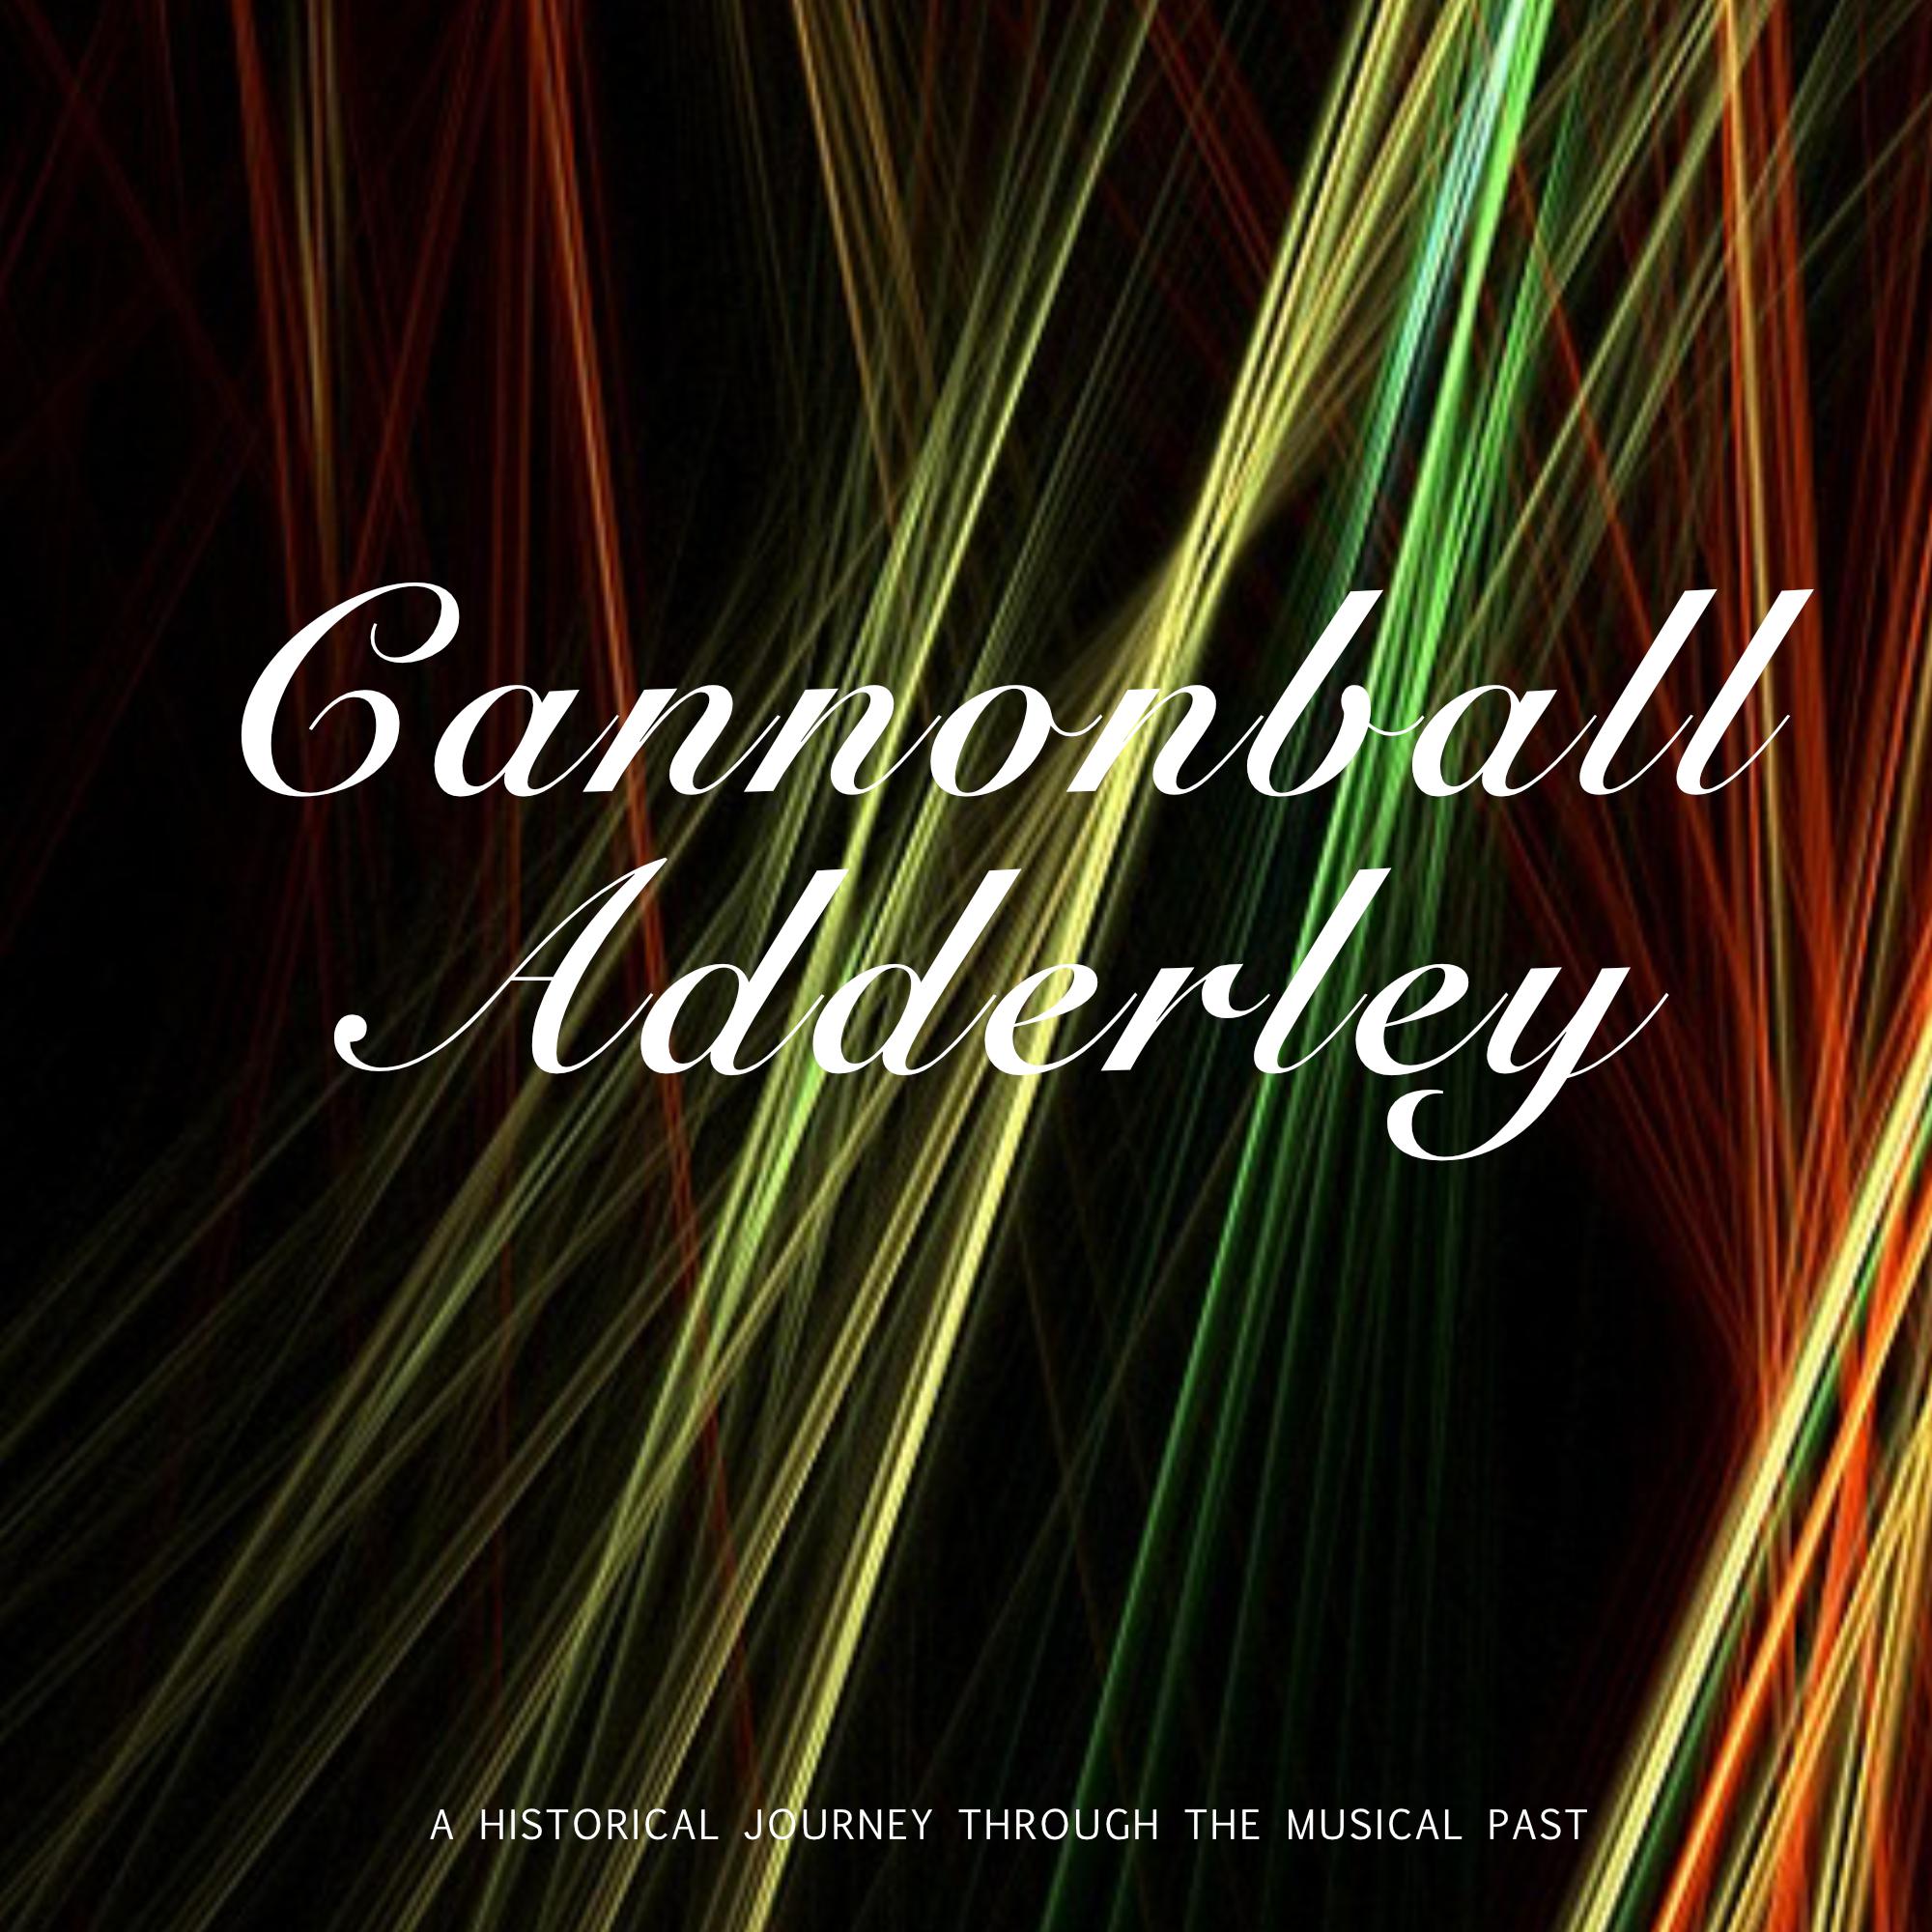 Cannonball Adderley